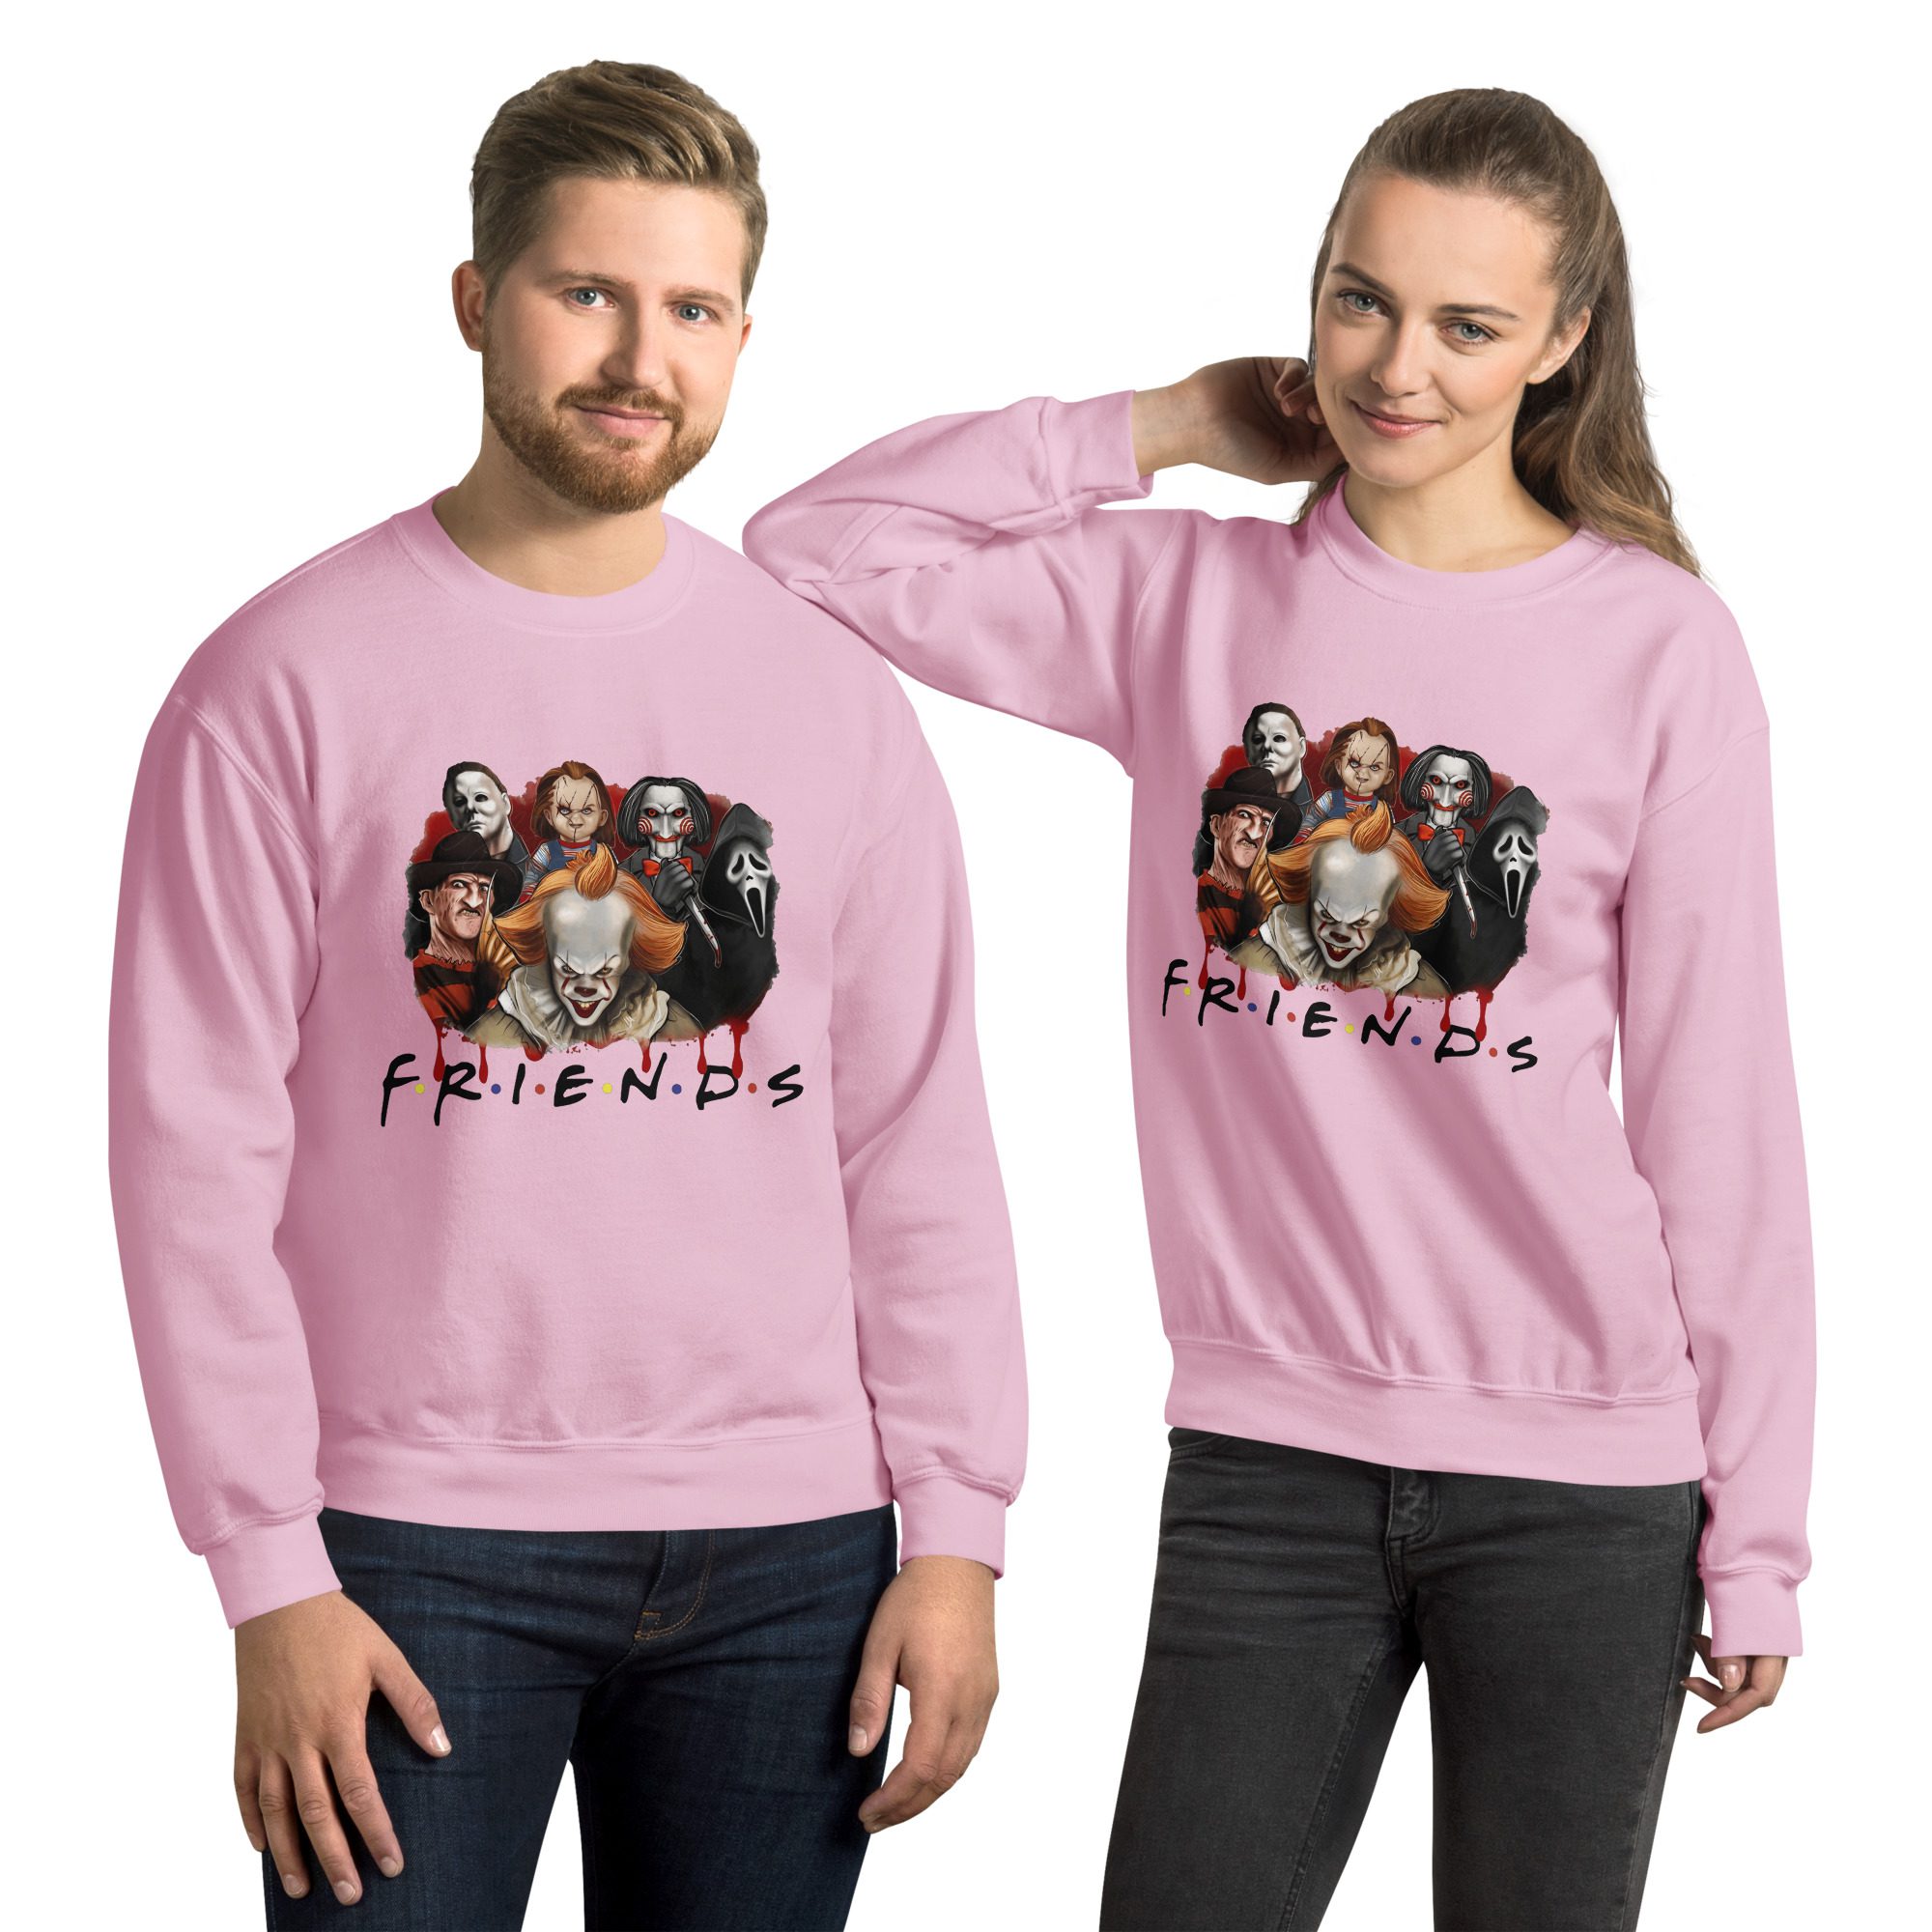 unisex crew neck sweatshirt light pink front 65391132662bf